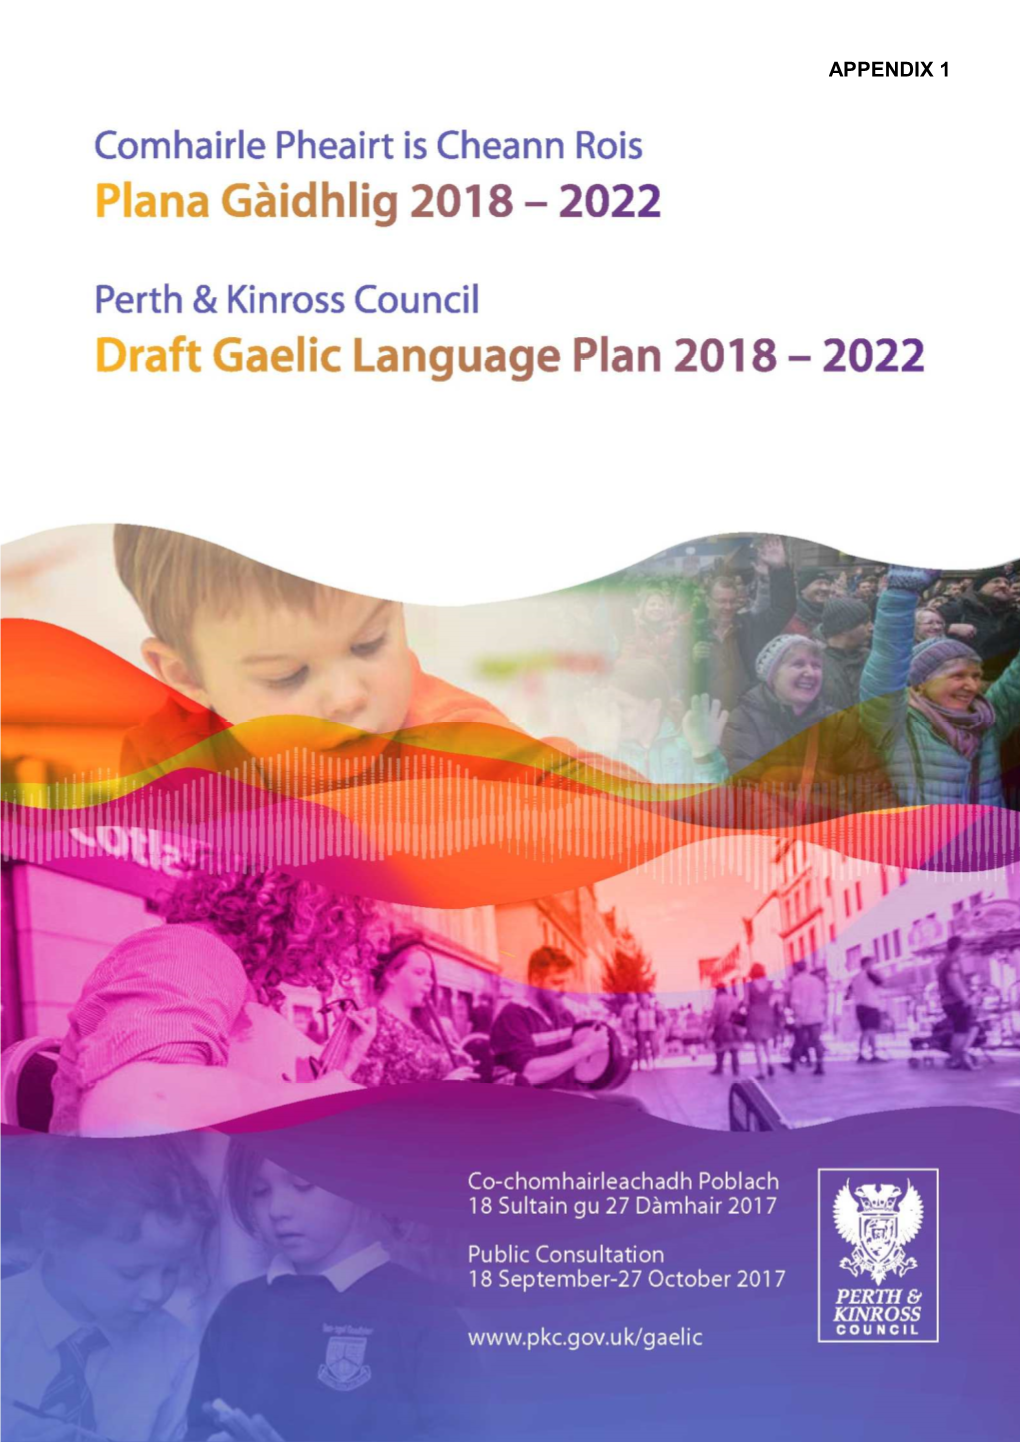 Perth & Kinross Council's Draft Gaelic Language Plan 2018